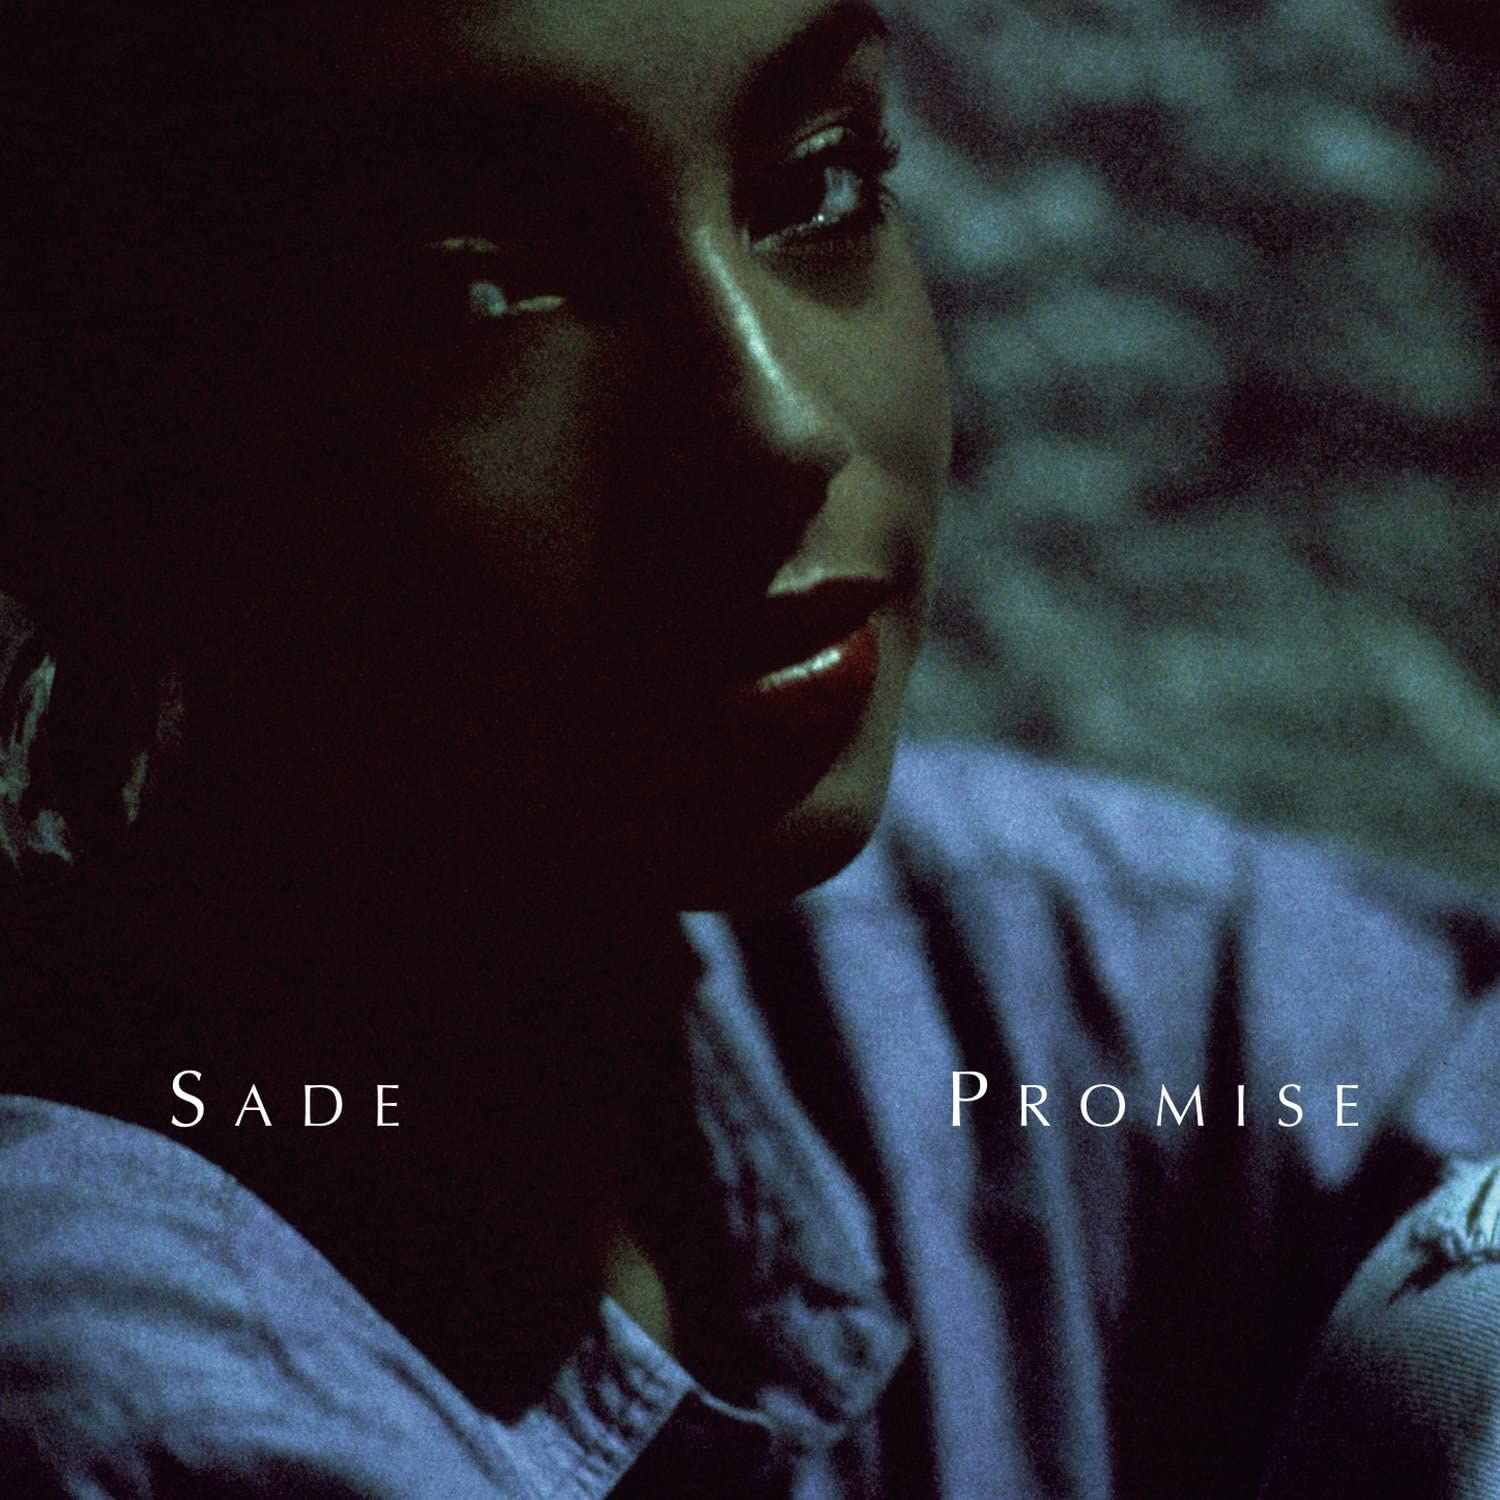 PROMISE / SADE